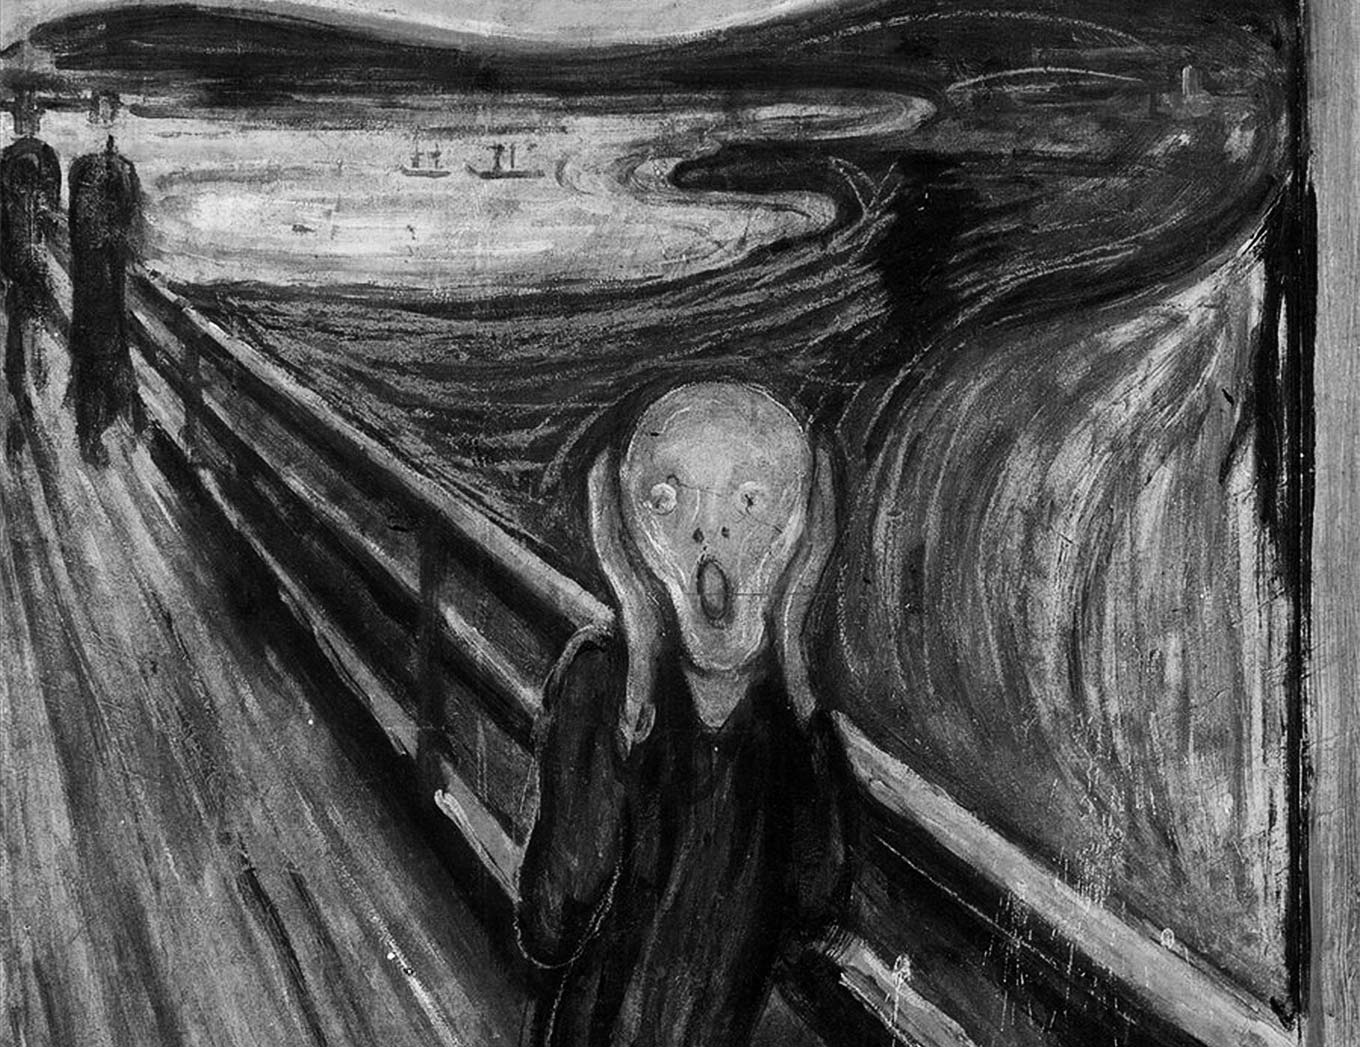 Edvard Munch's painting: The Scream